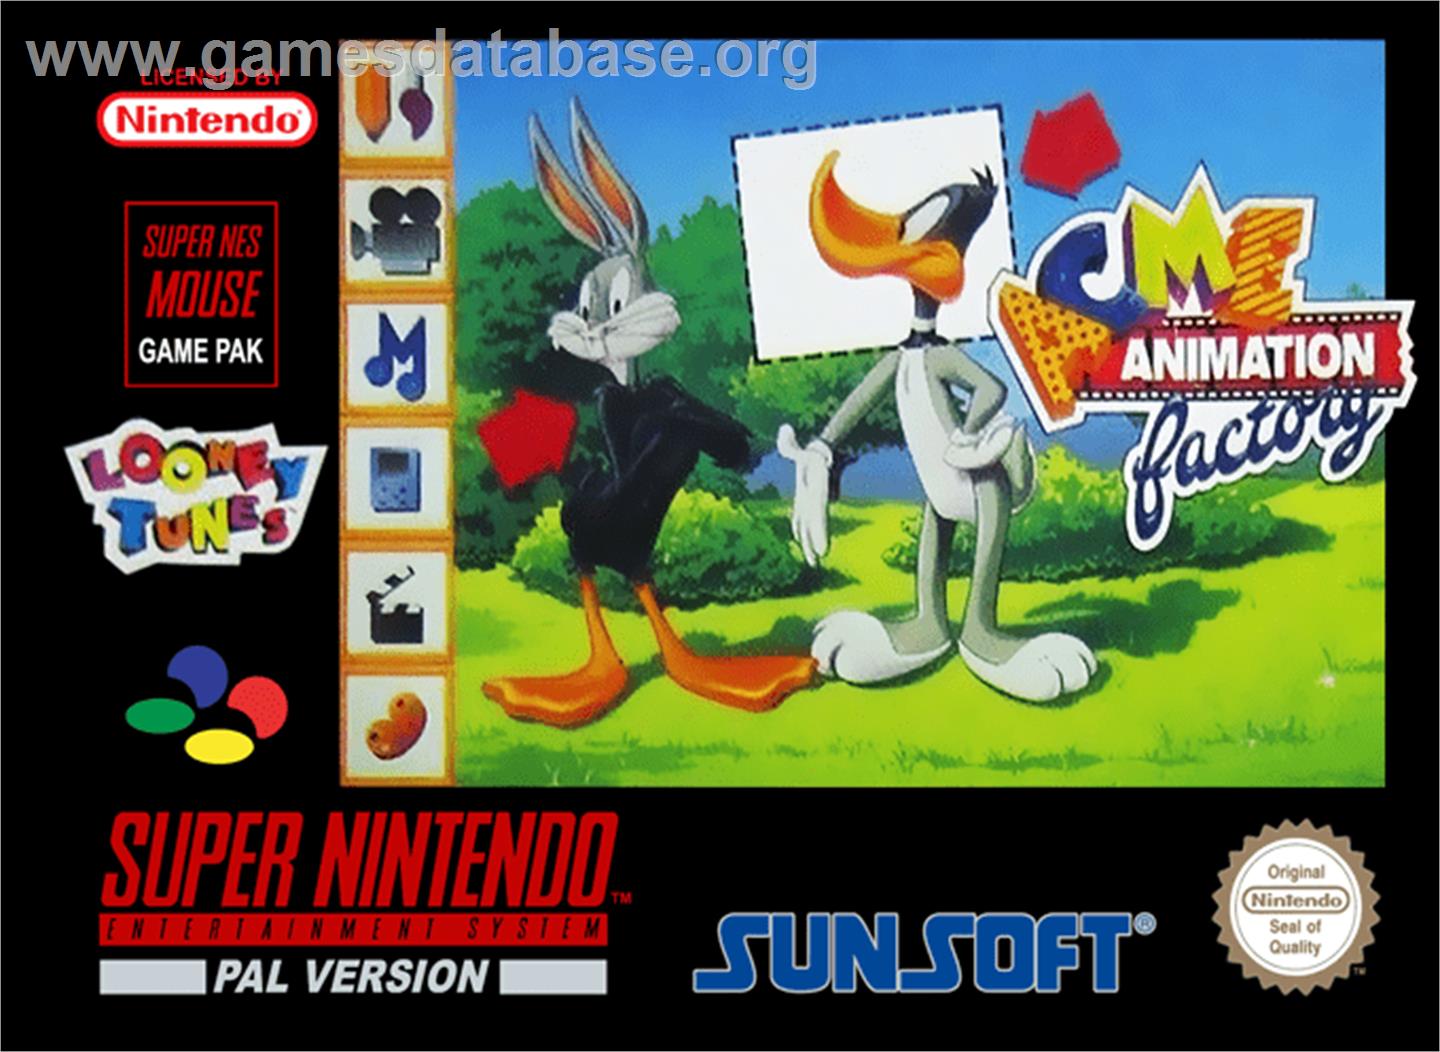 ACME Animation Factory - Nintendo SNES - Artwork - Box